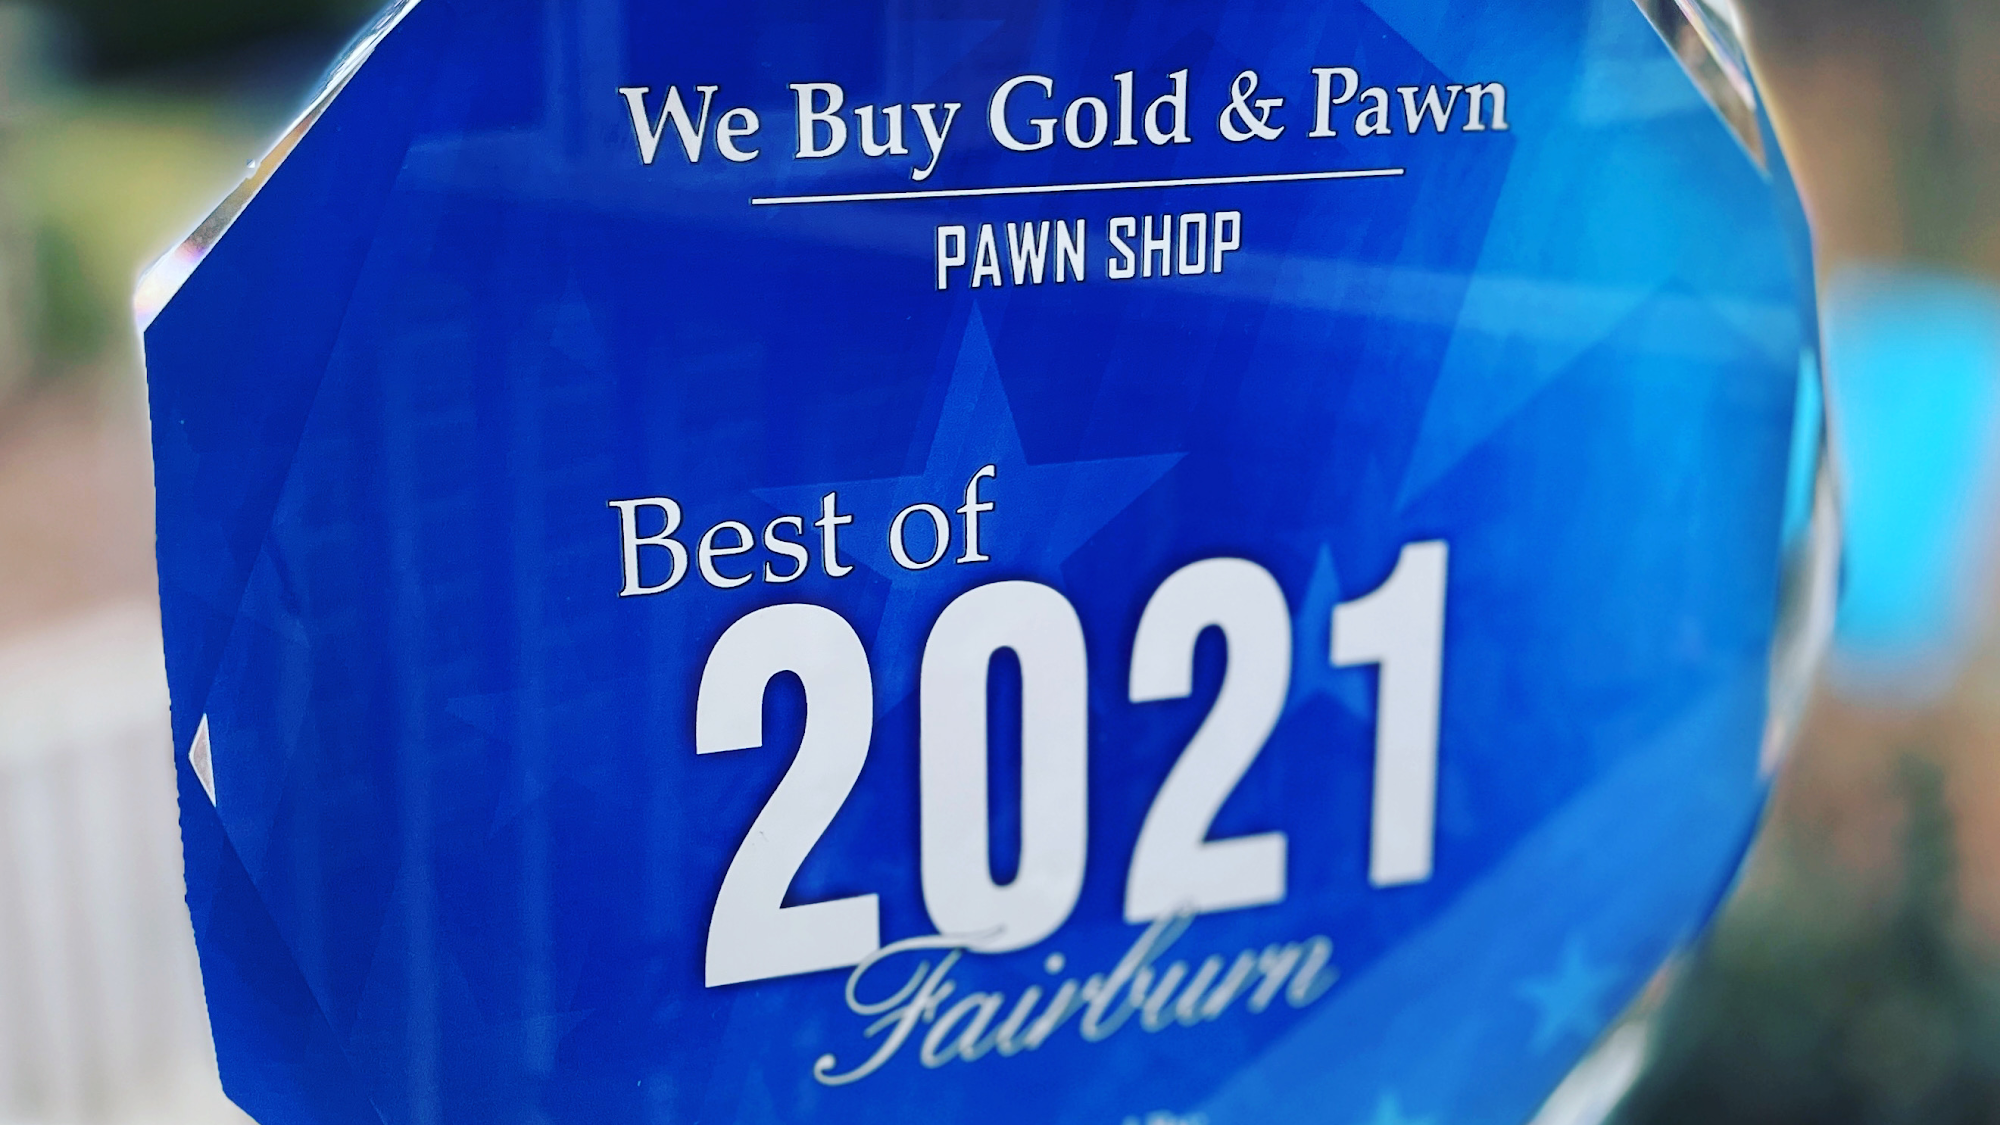 We Buy Gold & Pawn